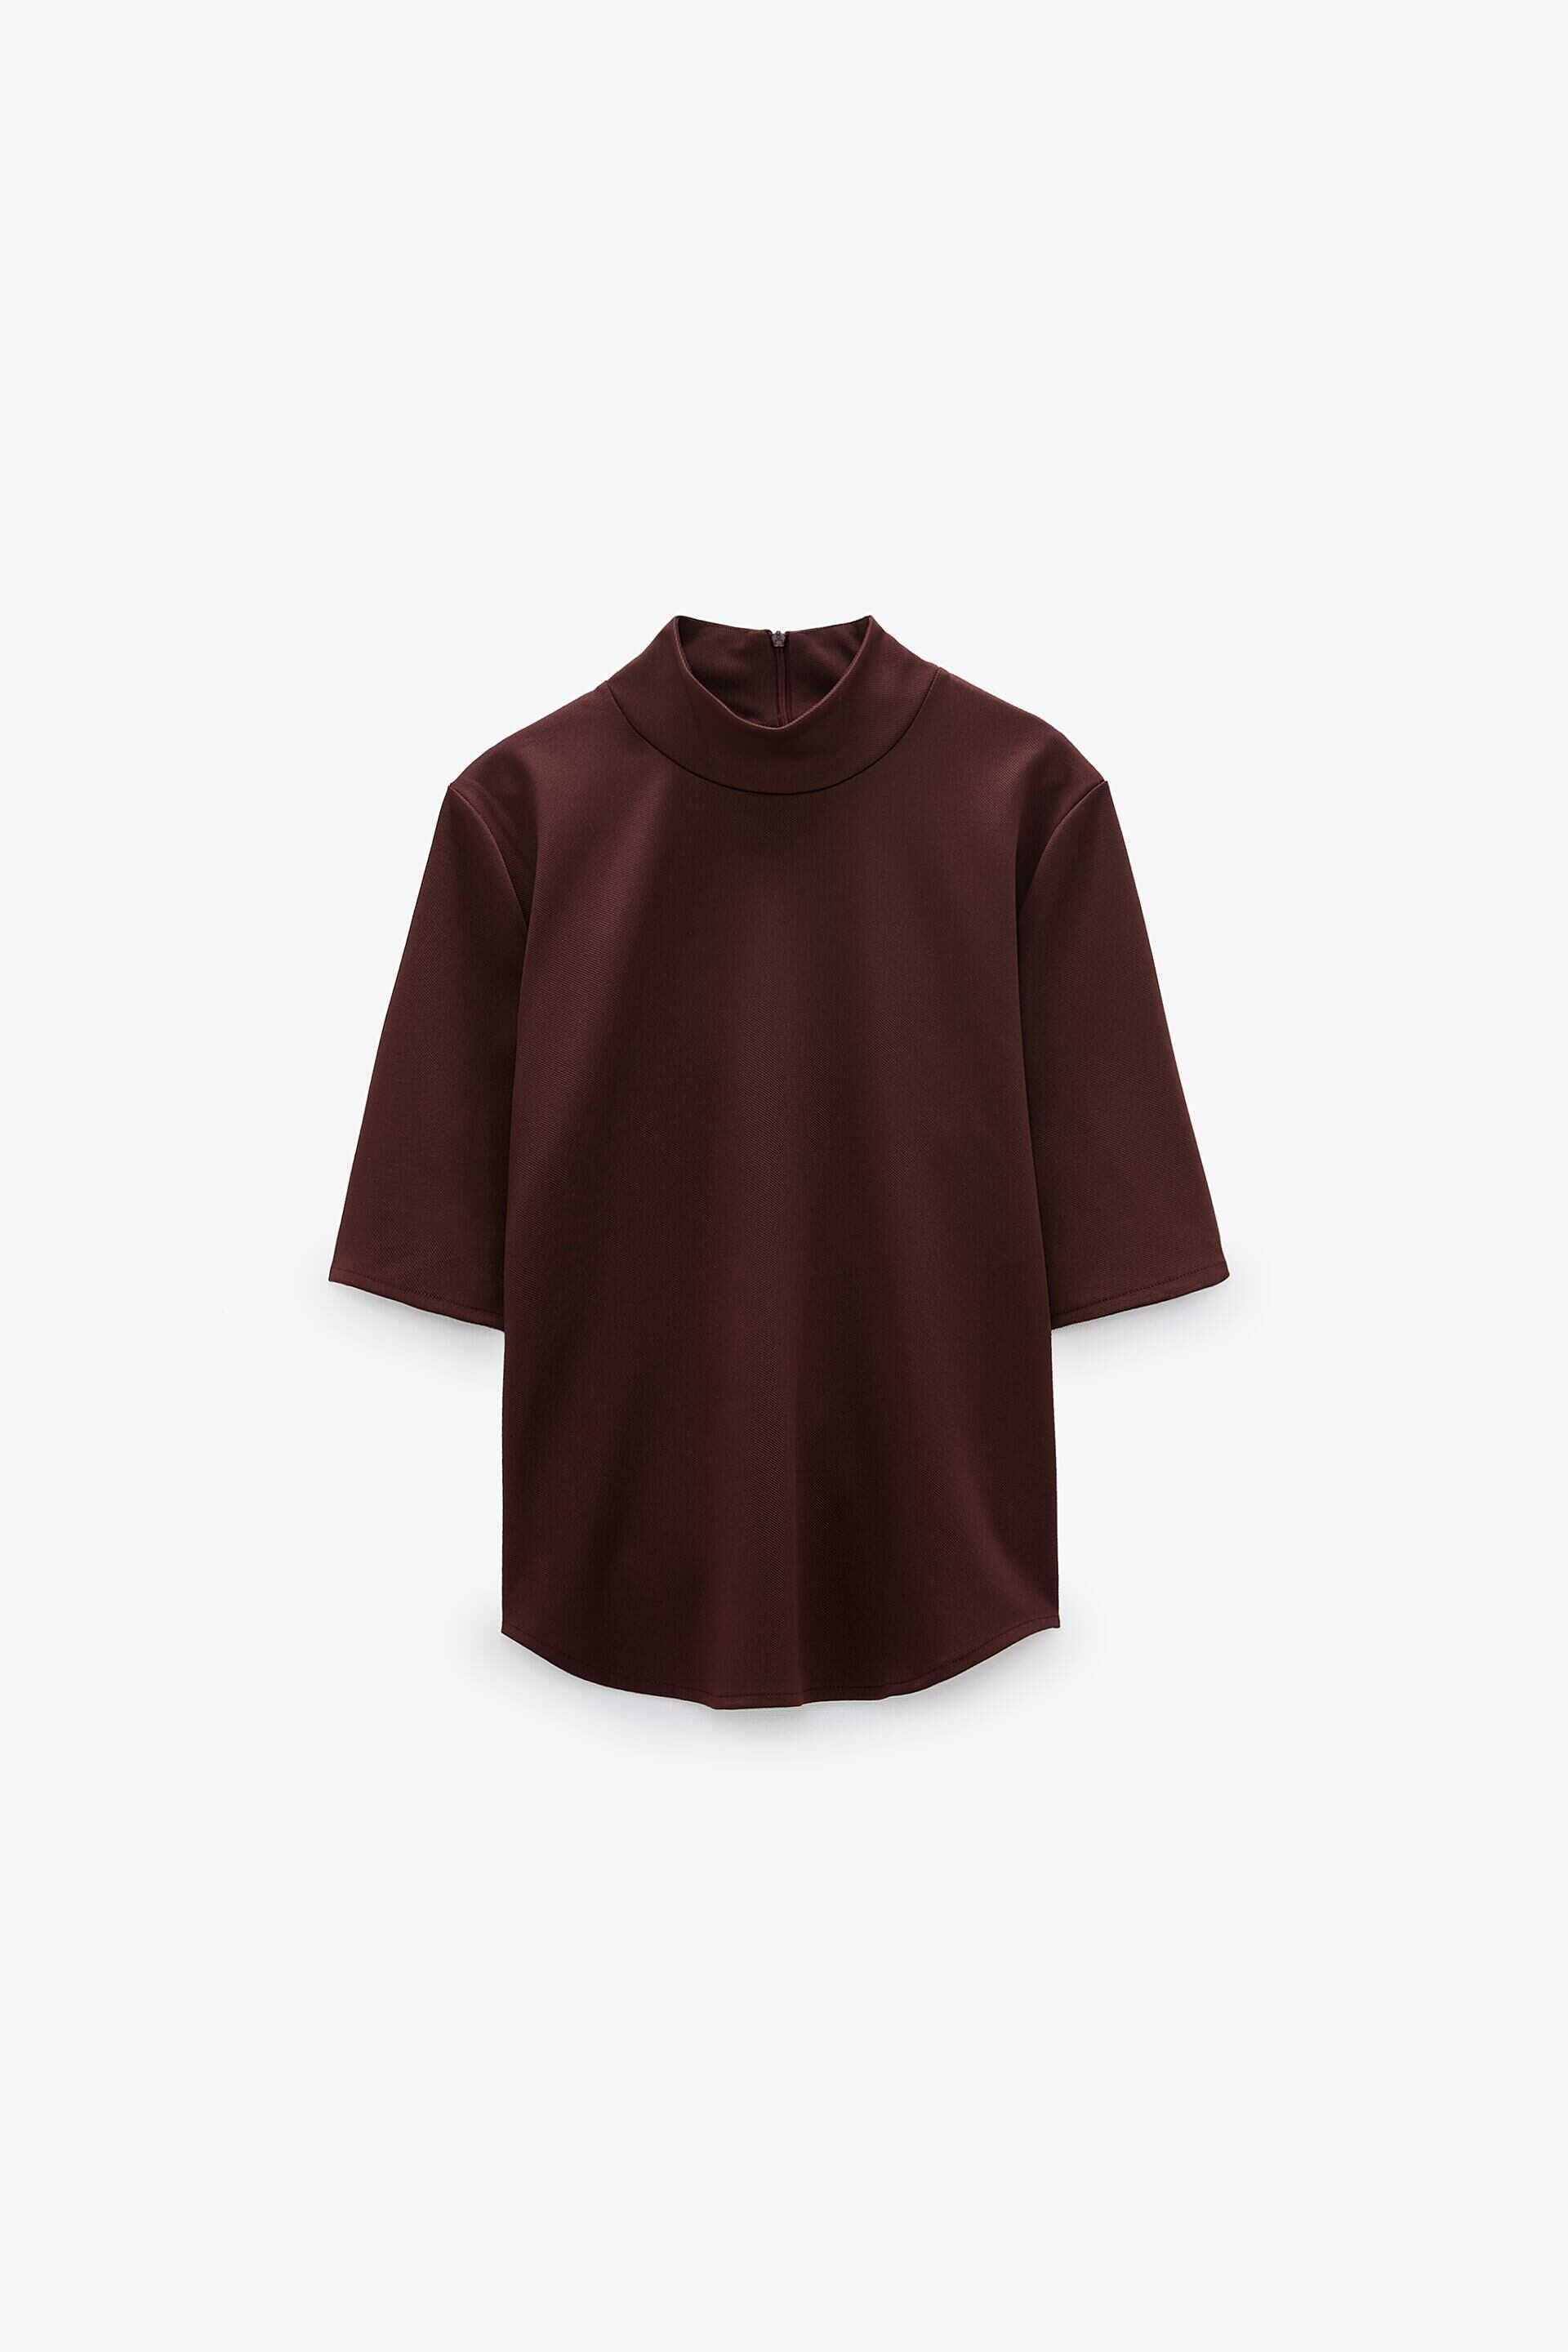 Дамска тениска с високо деколте Zara, 96% полиестер, Кафява, XL